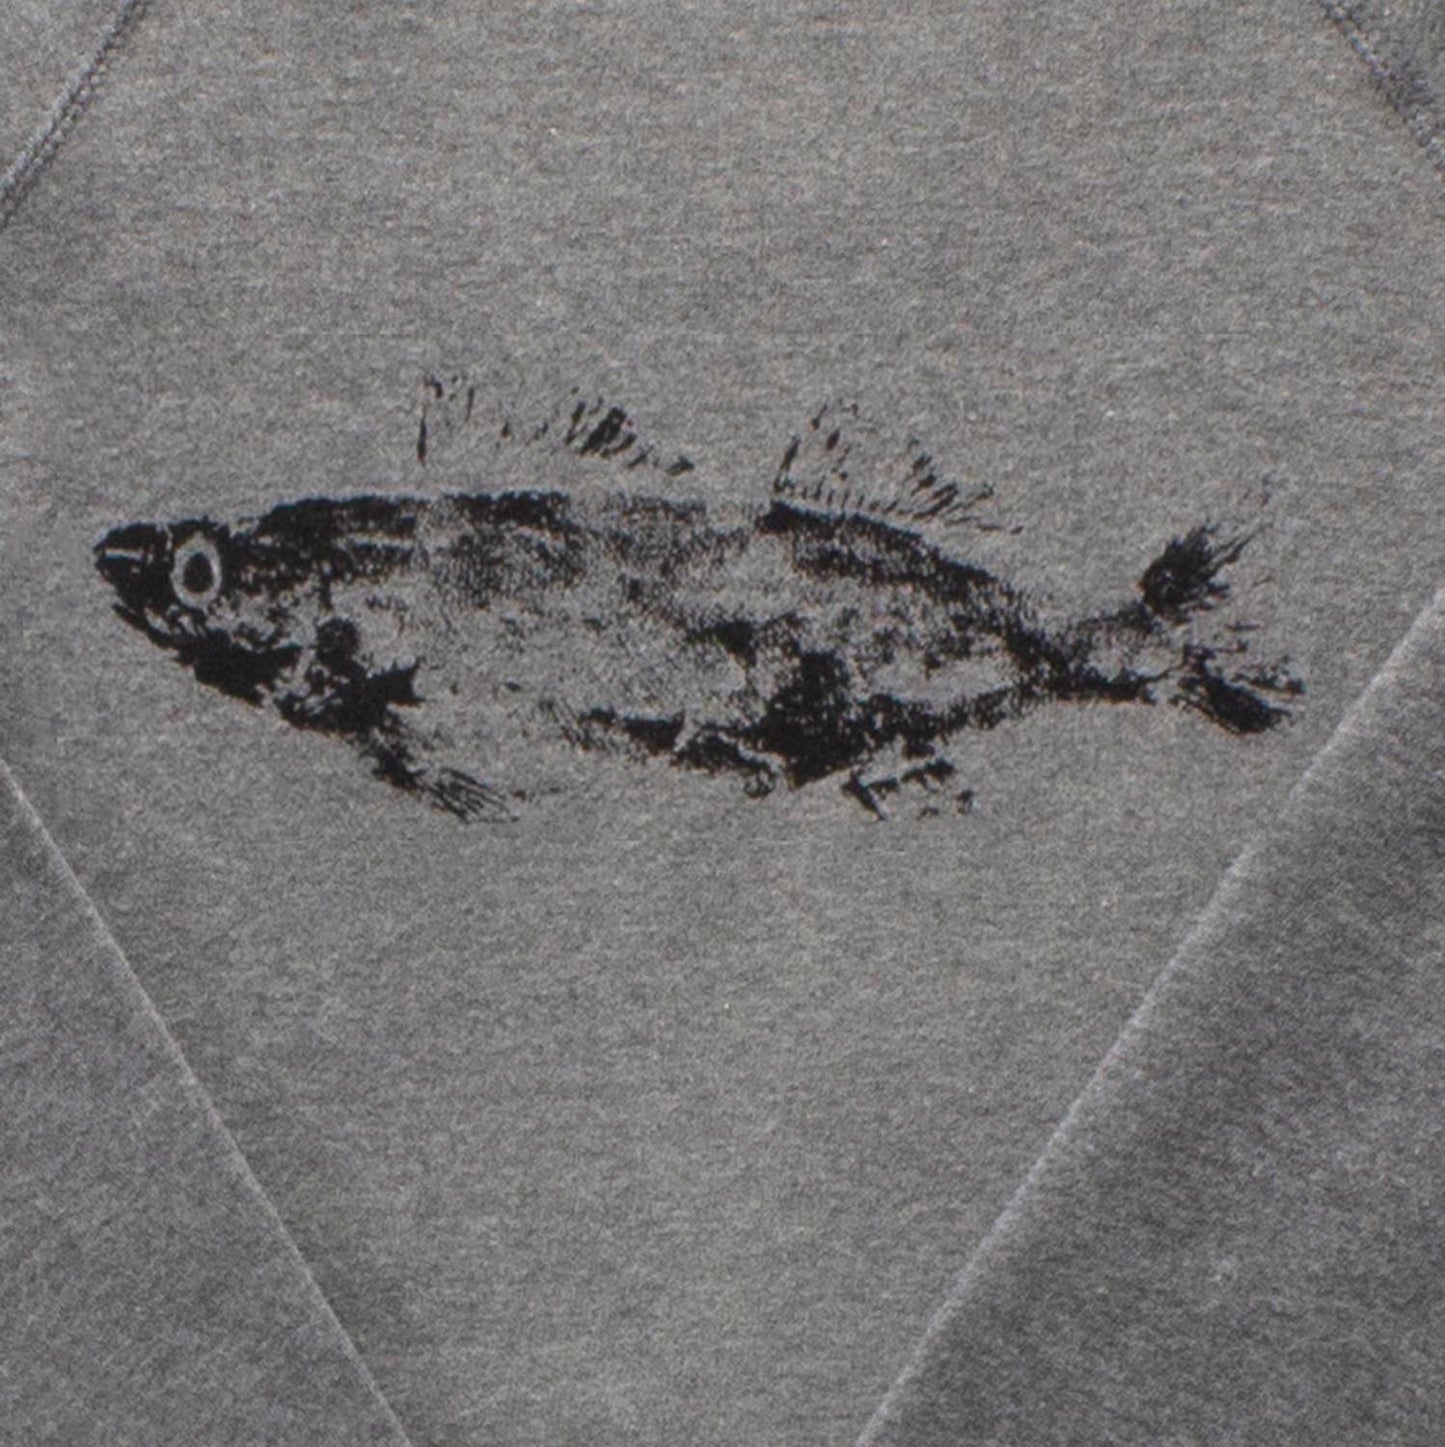 Walleye Fish Print - Unisex Crewneck Sweatshirt - Grey